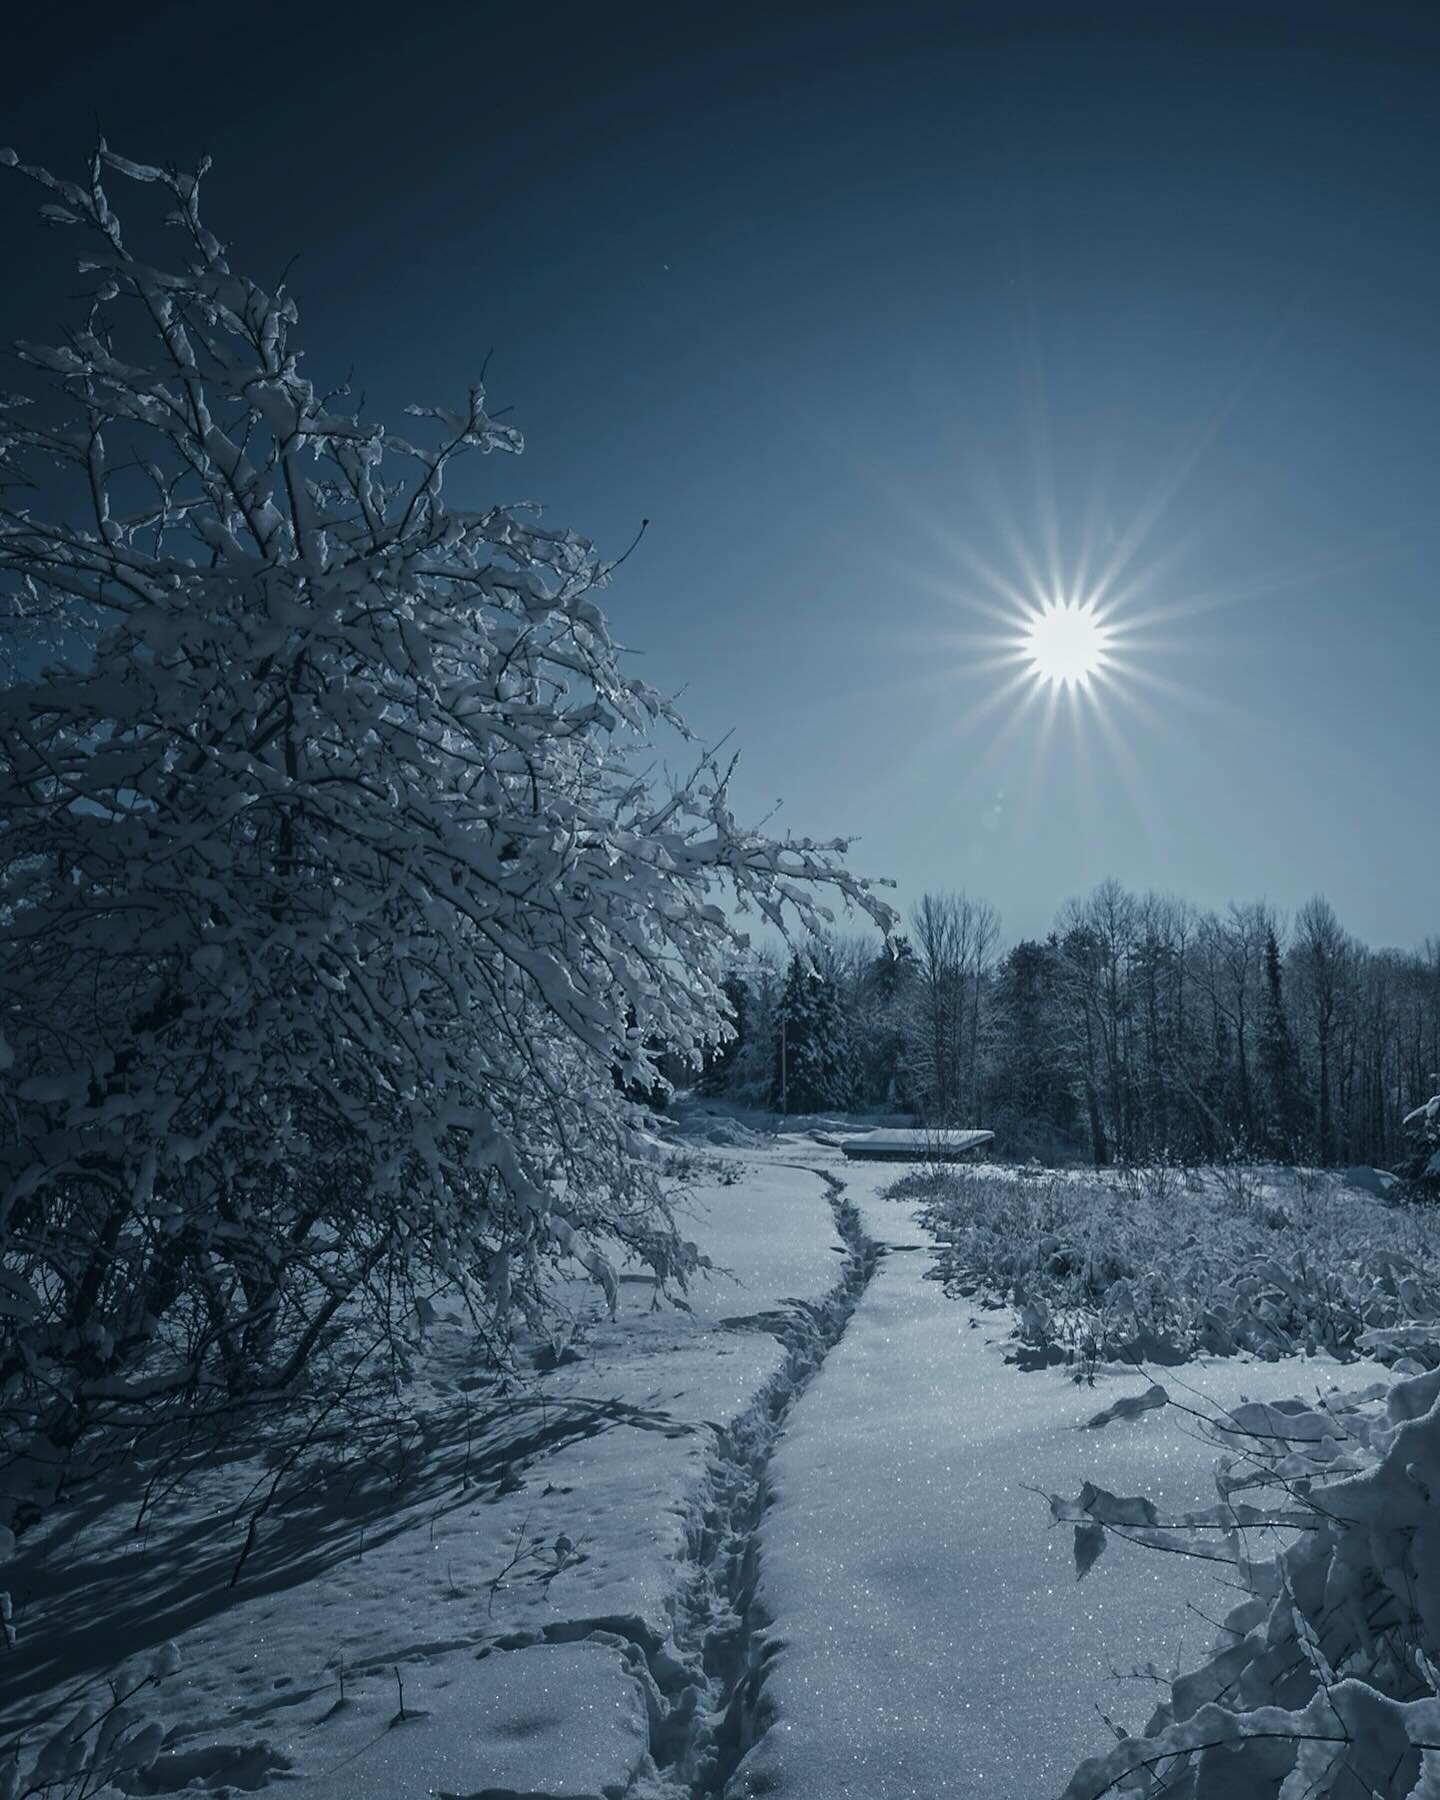 Winter morning walks in Muskoka.⁠
⁠
📸  by @loki_highlock⁠